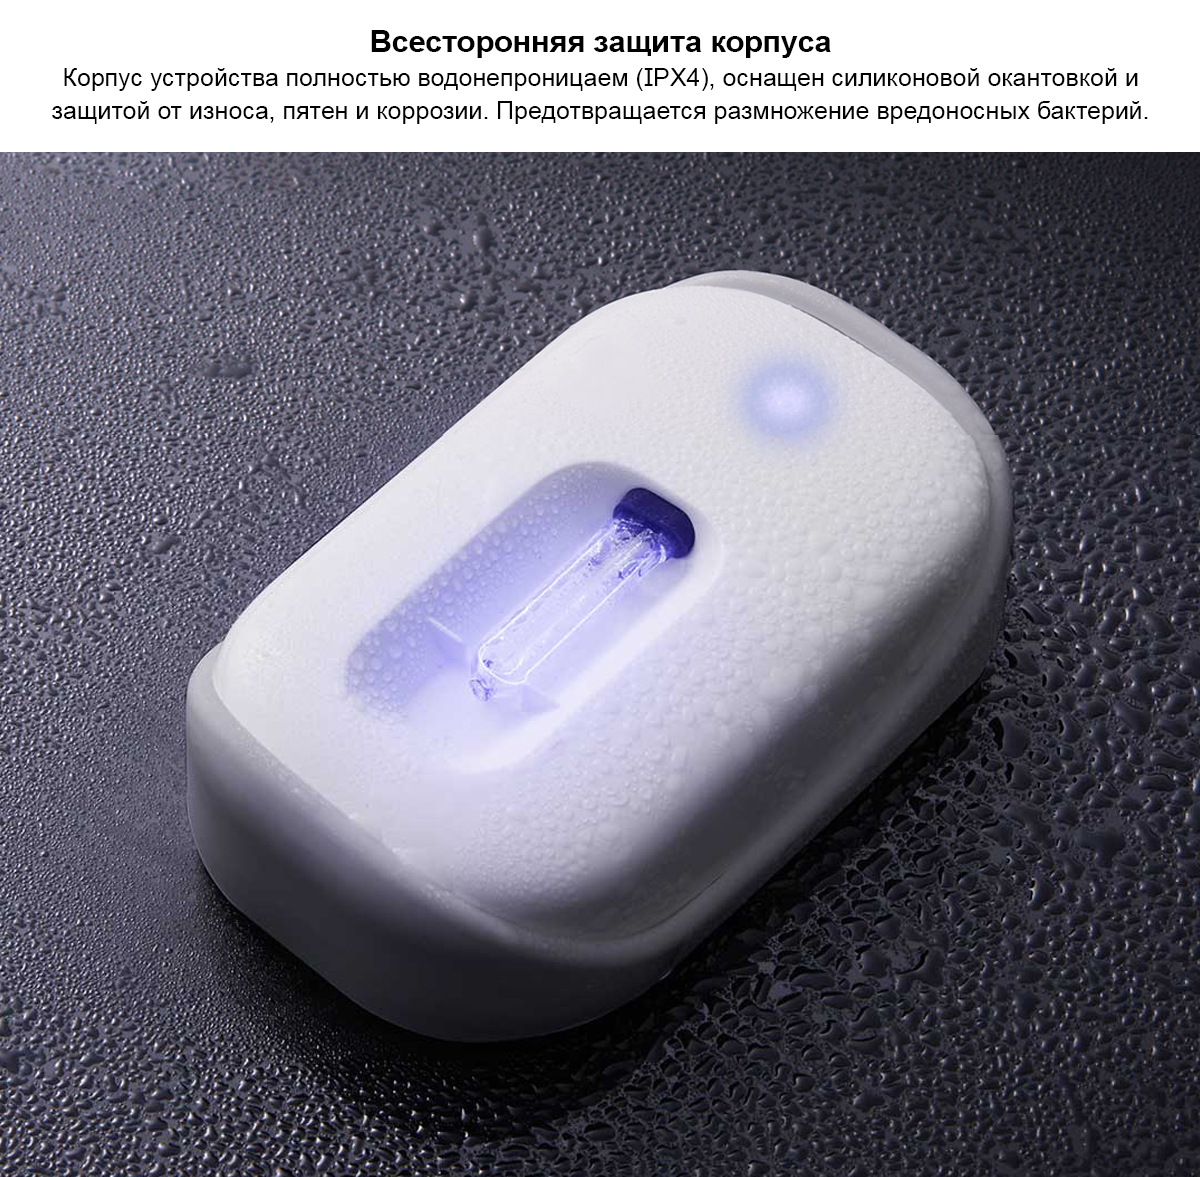 Бактерицидная лампа для унитаза Xiaoda Intelligent Sterilization Deodorizer Lamp